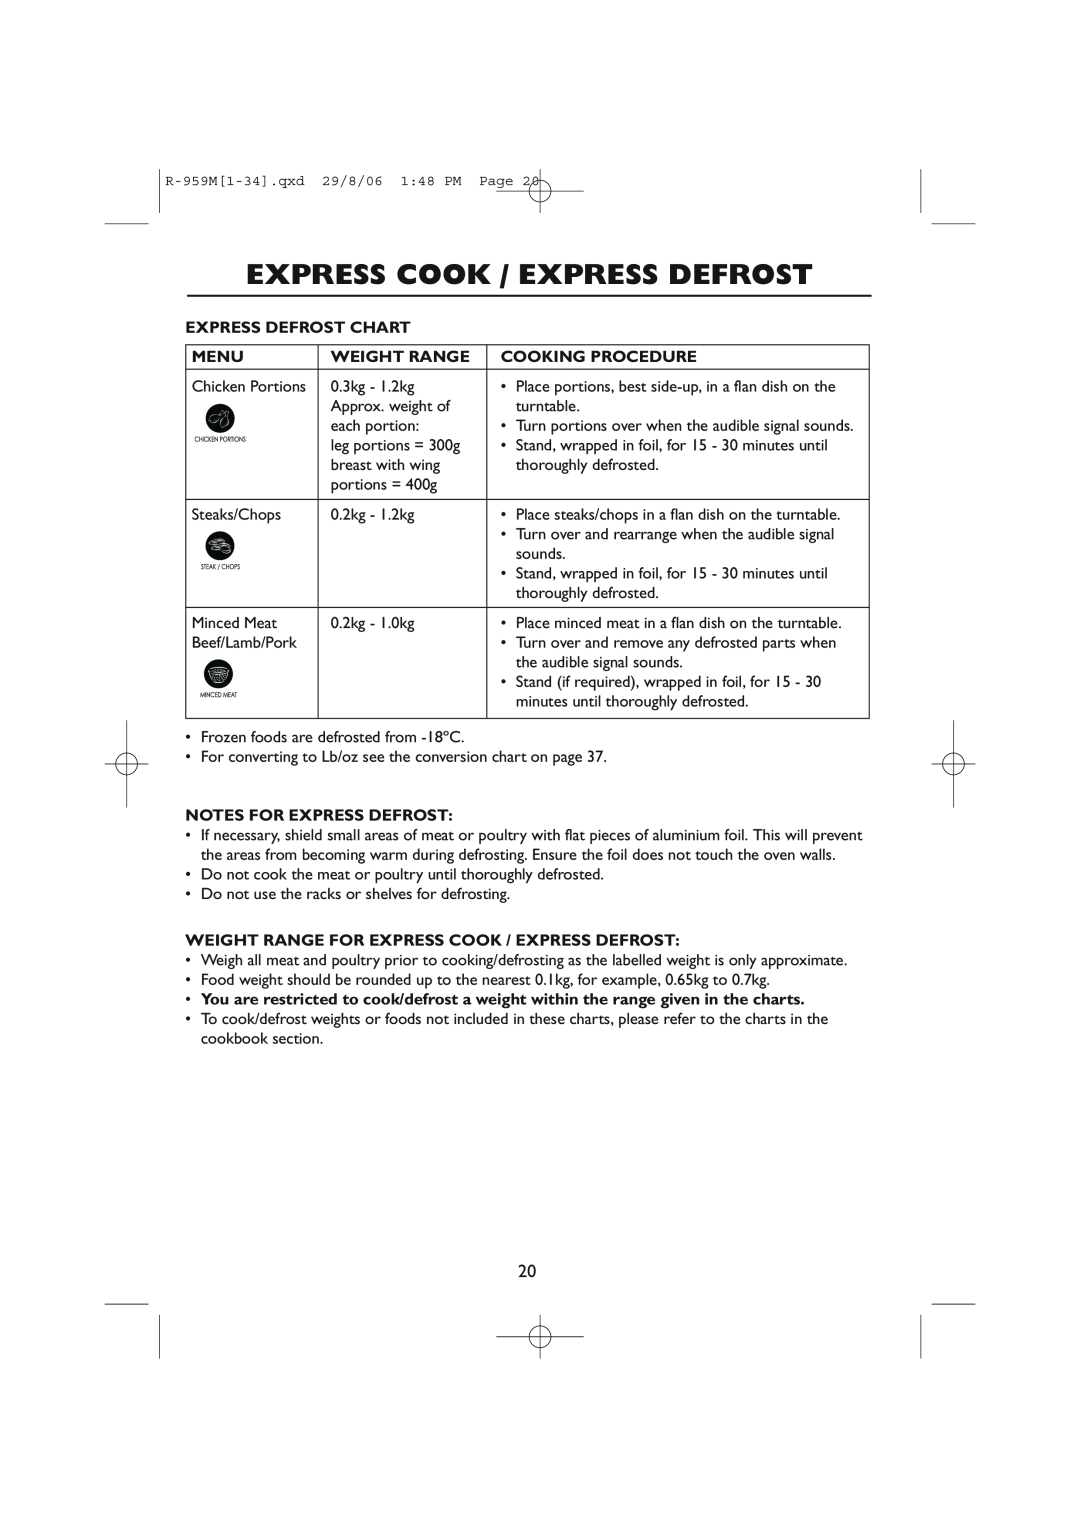 Sharp R-98STM-A Express Defrost Chart, Notes For Express Defrost, Weight Range For Express Cook / Express Defrost, Menu 